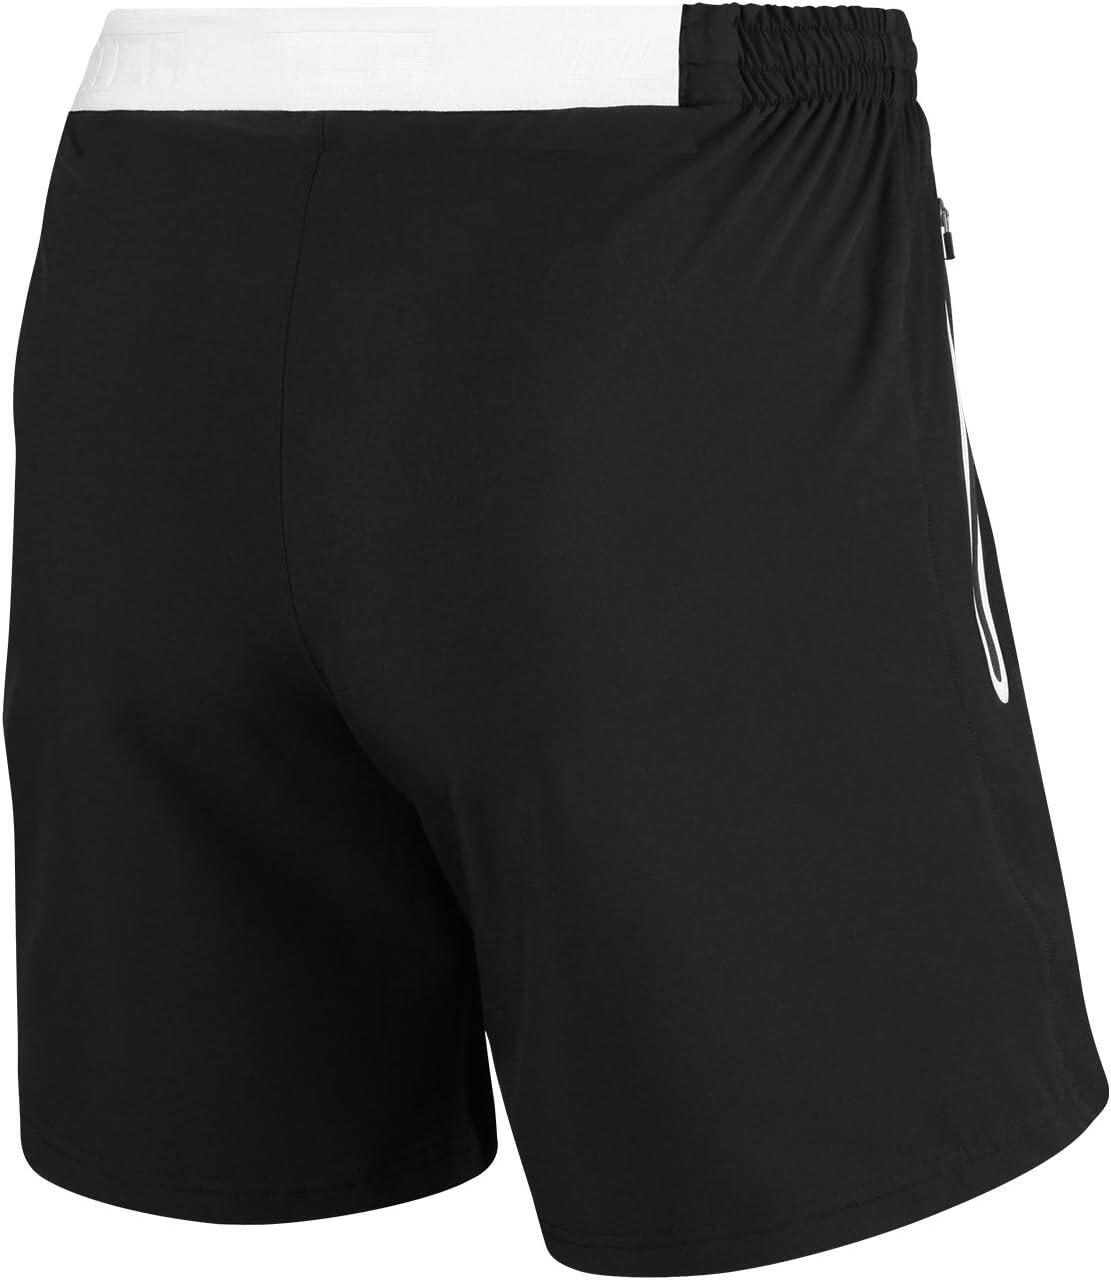 Men's Elite Tech Lightweight Running Shorts with Zip Pockets - Black/White 2/6